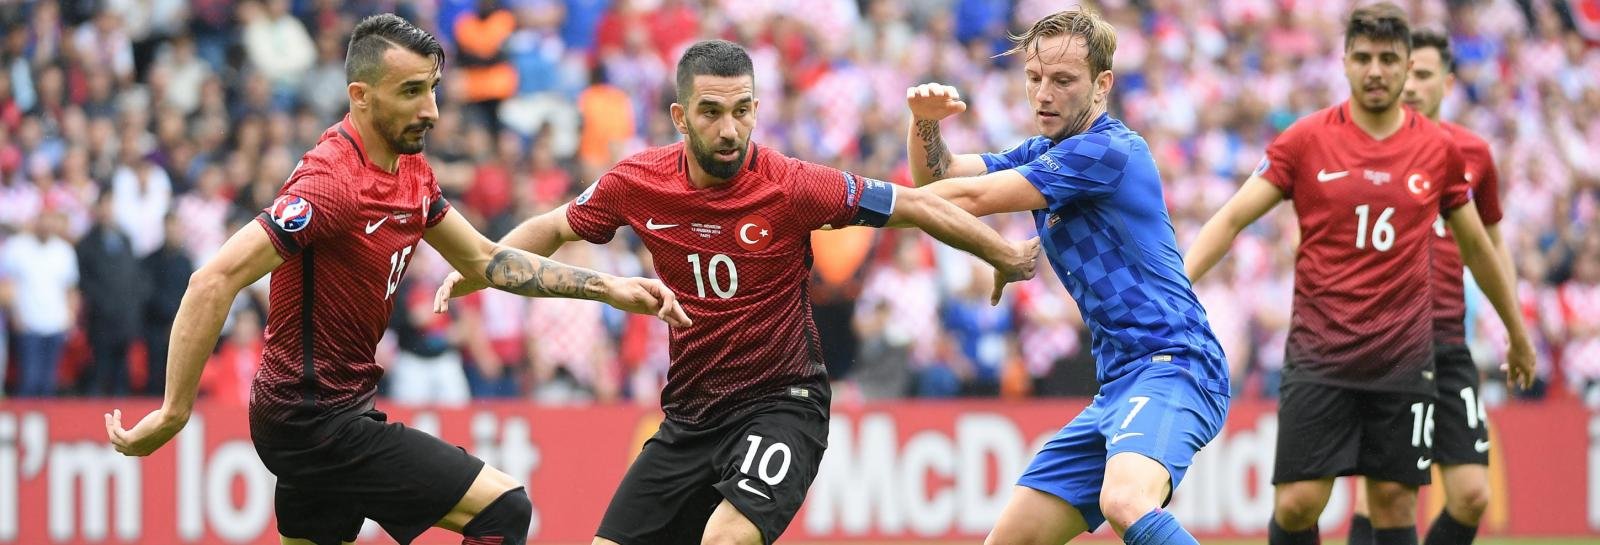 Czech Republic vs Turkey: EURO 2016 Group D Preview & Prediction